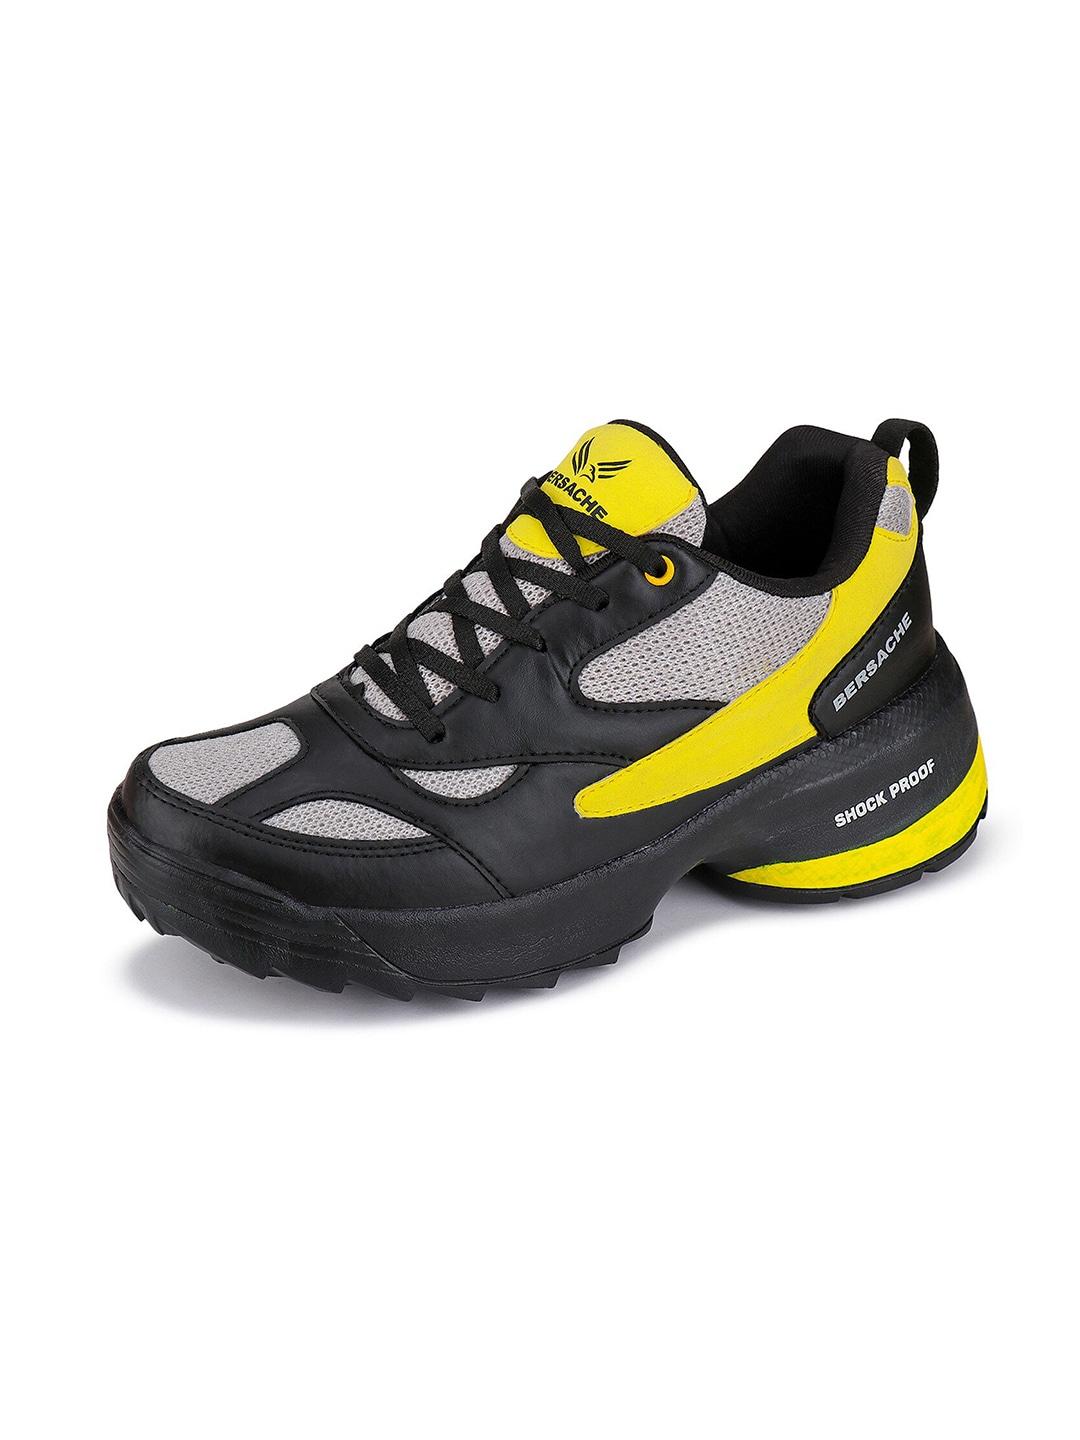 bersache-men-lightweight-shock-proof-running-shoes